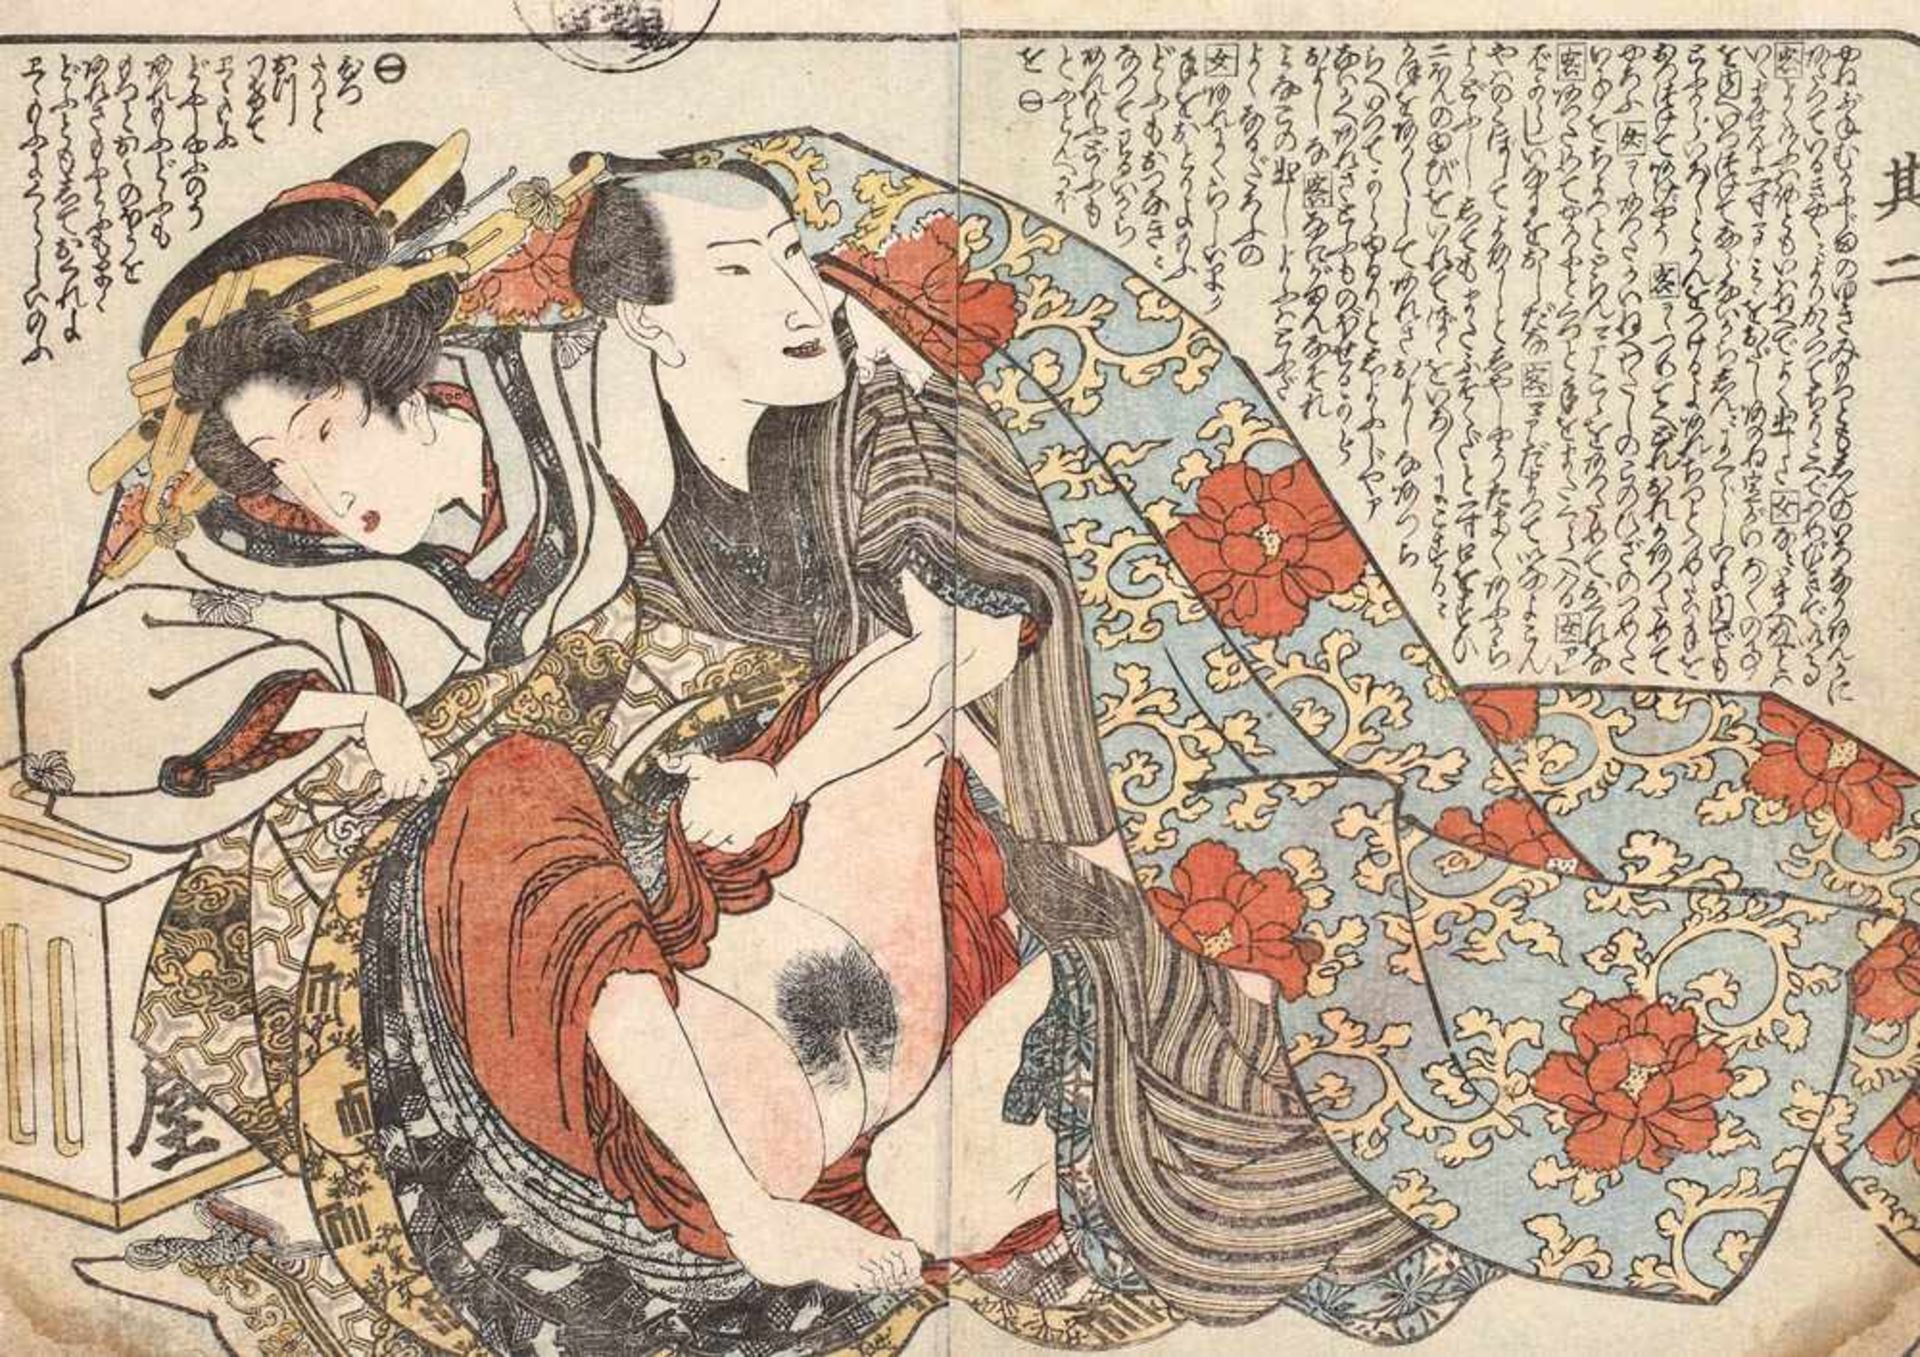 Shunga woodblock depicting a courtesan and a samurai, cca. 1810Shunga woodblock depicting a